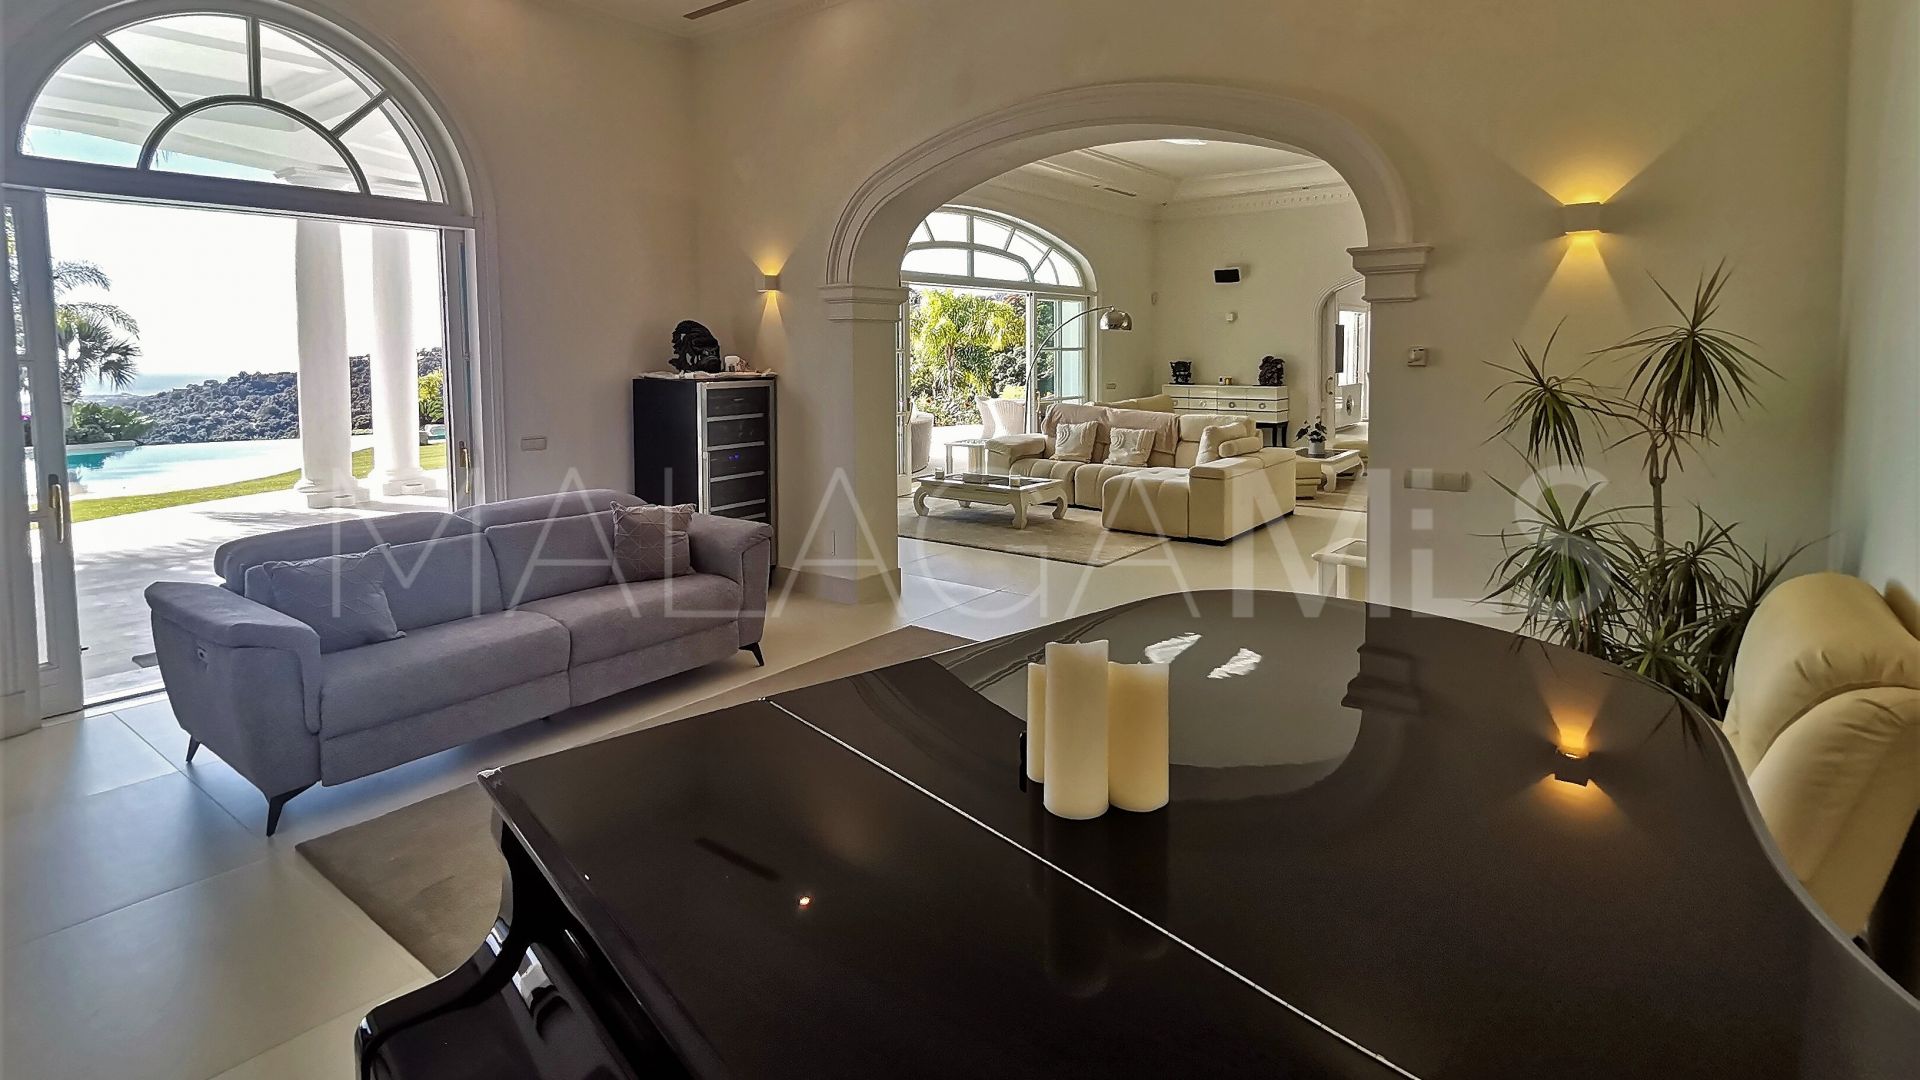 For sale villa in La Zagaleta with 6 bedrooms